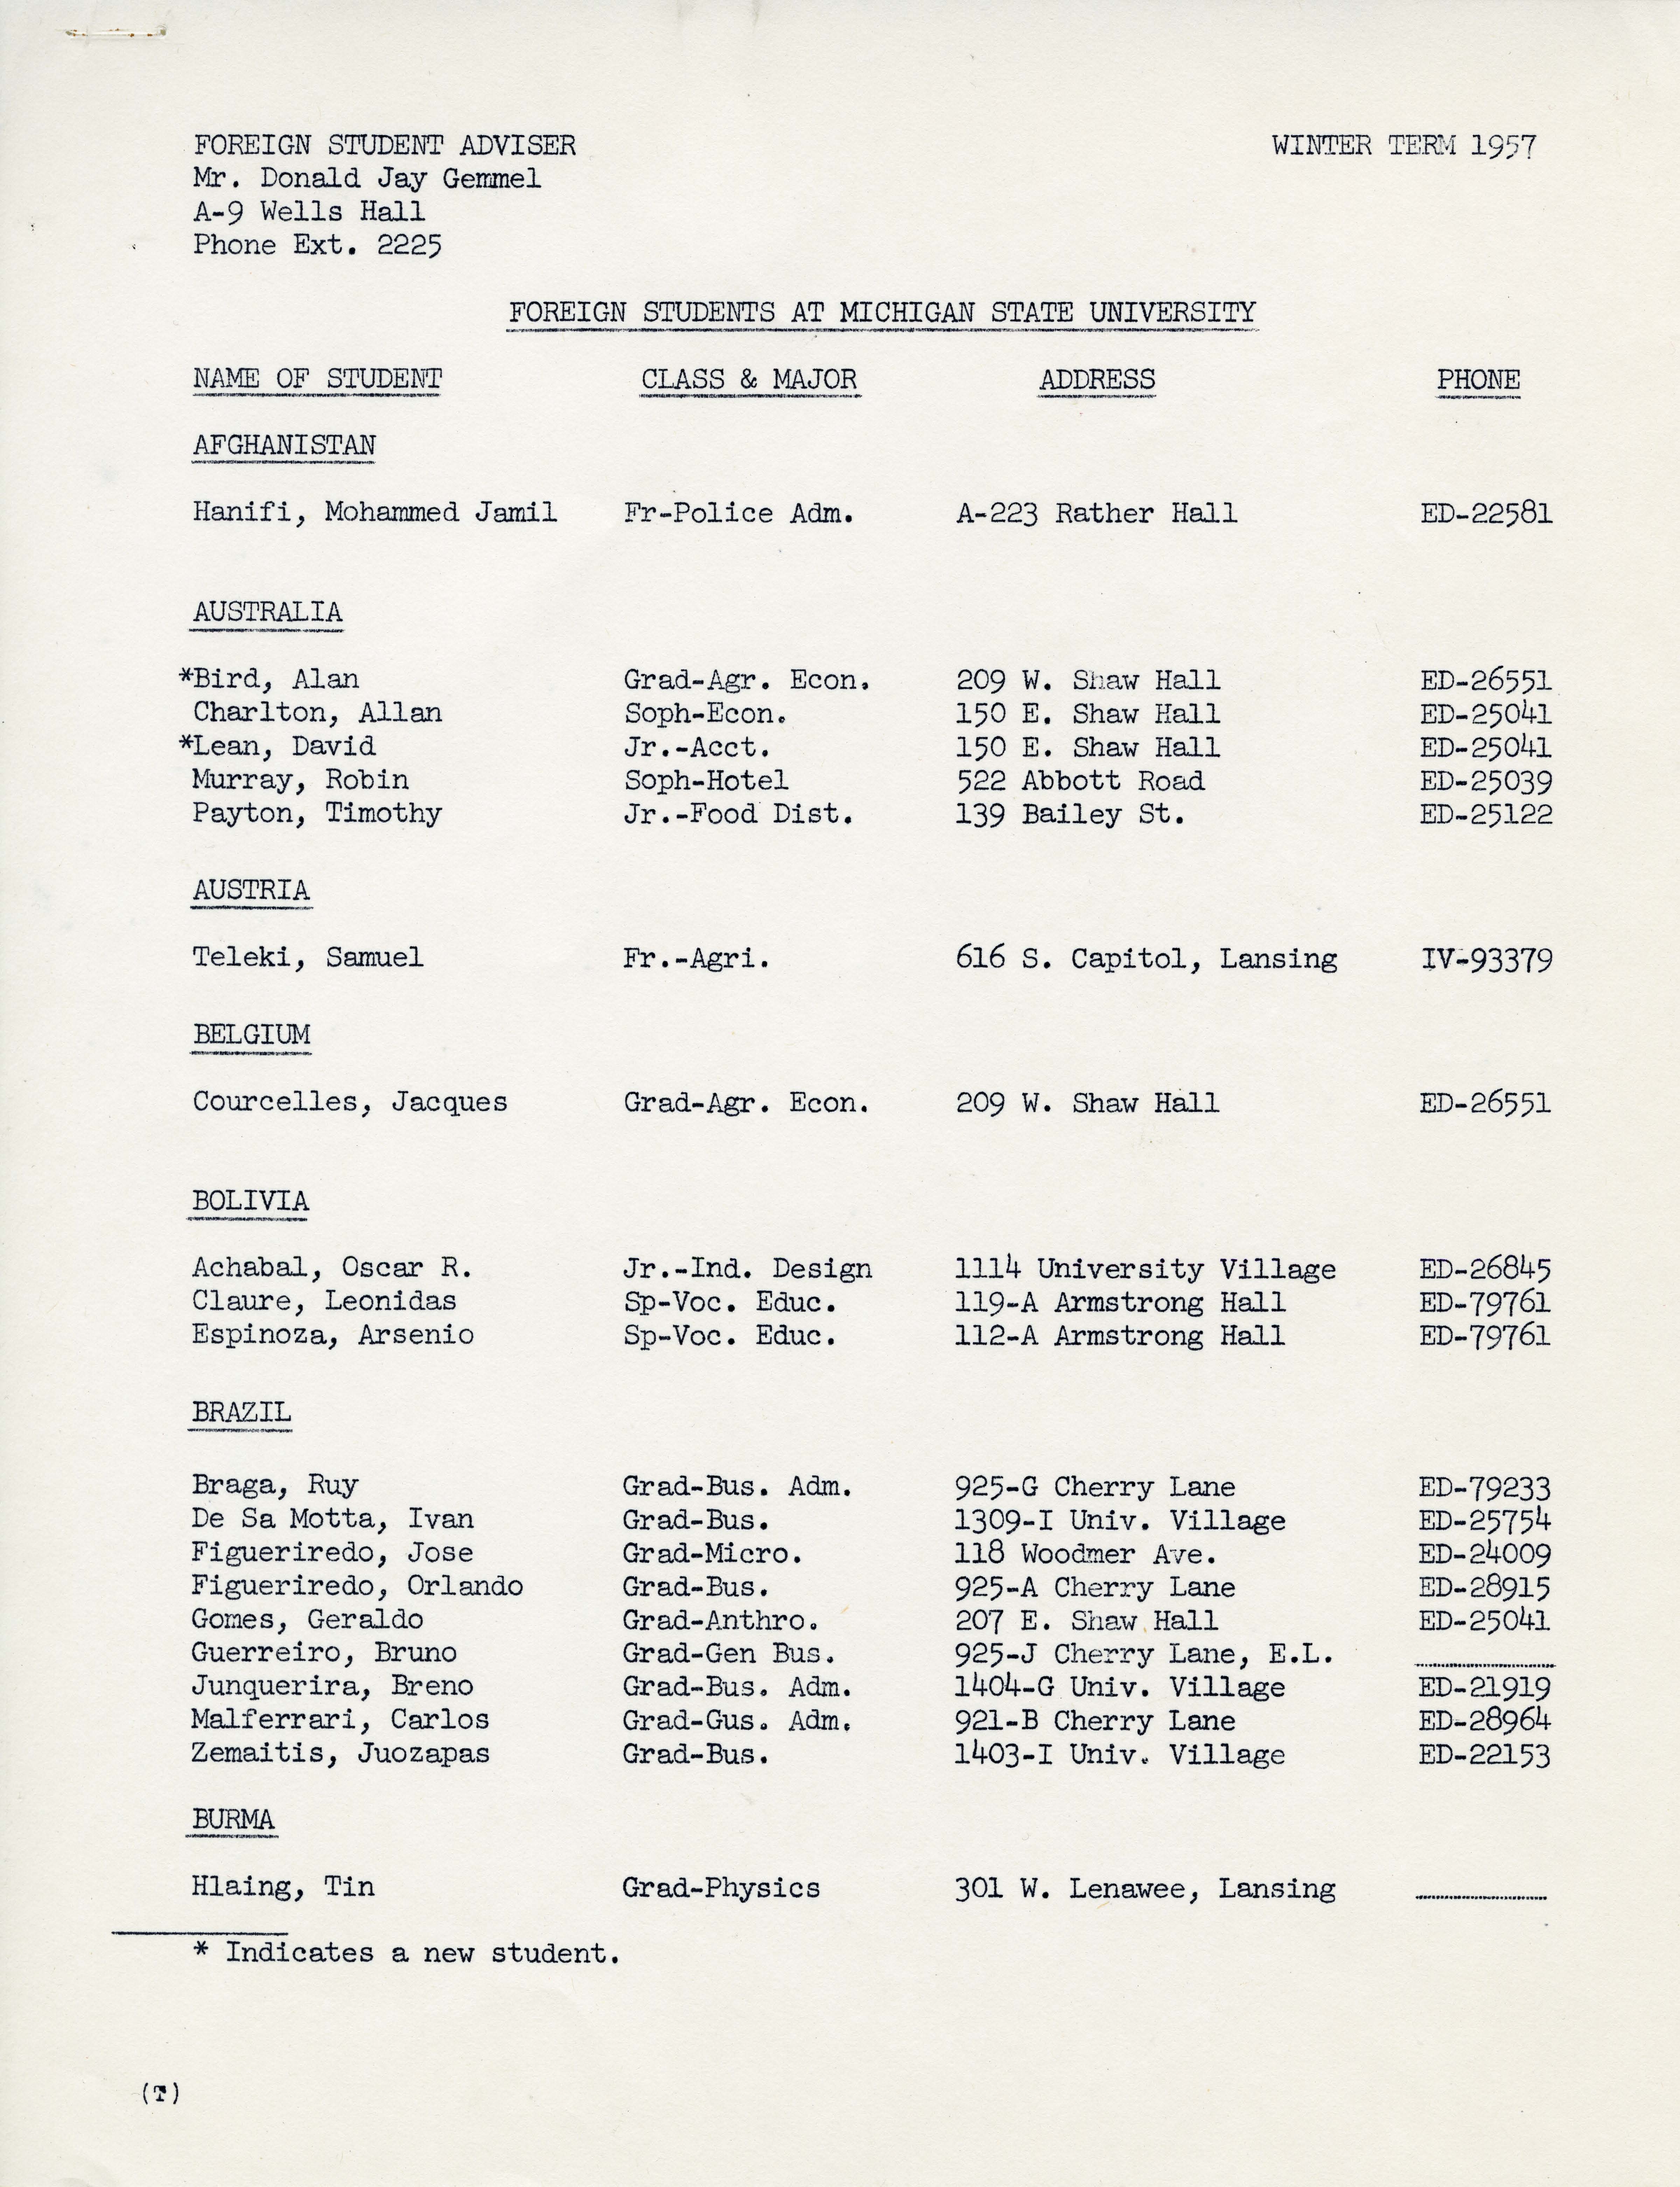 1957 (Winter) International Student Directory